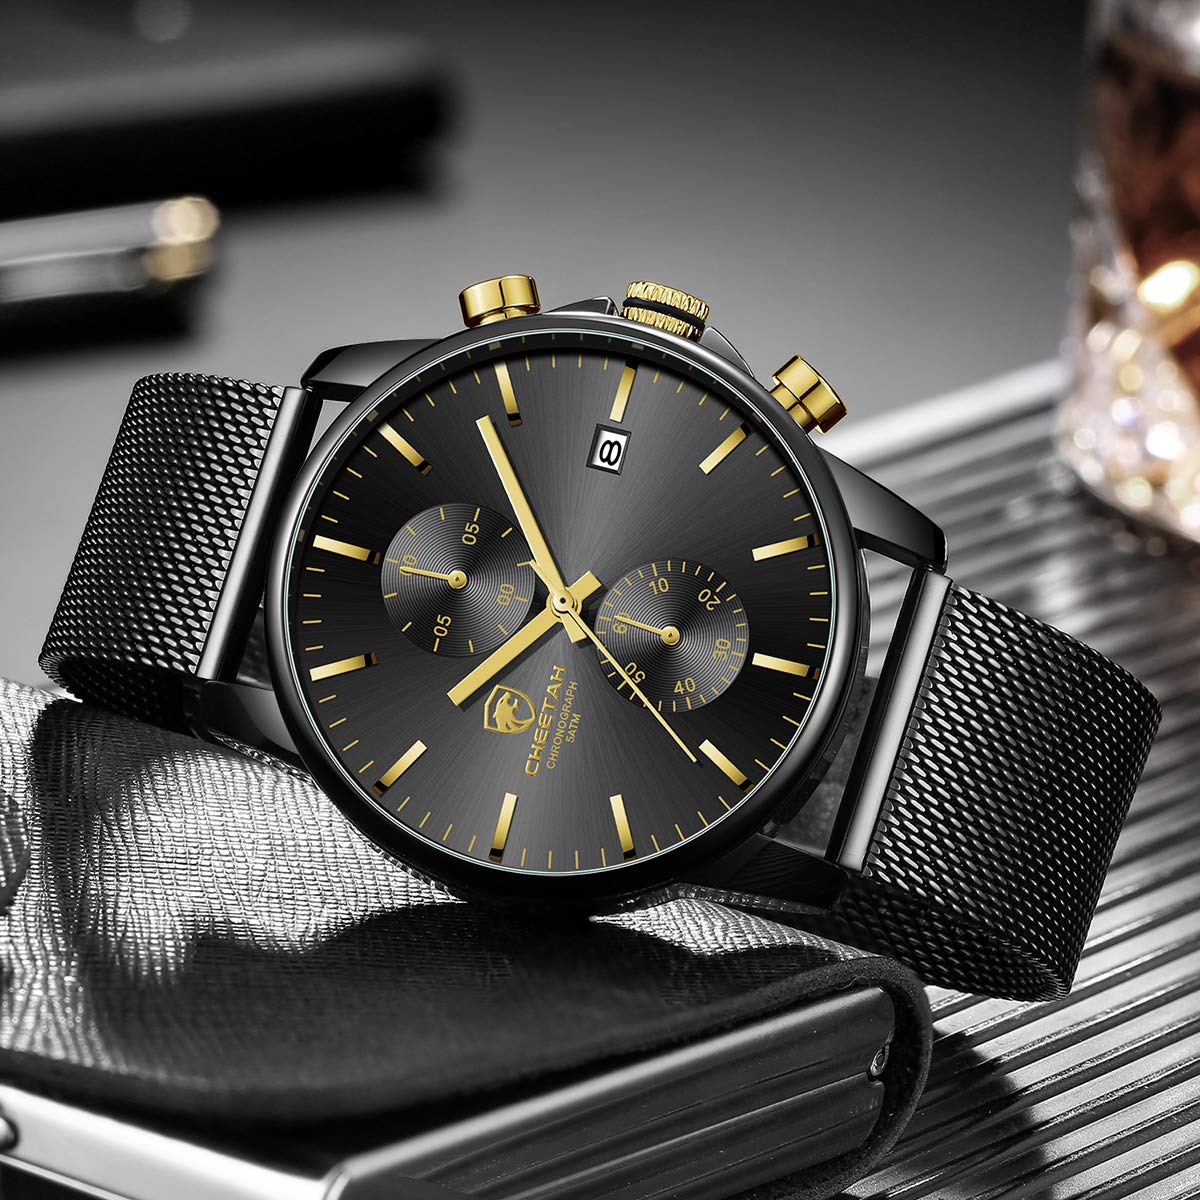 GOLDEN HOUR Mens Watch Fashion Sleek Minimalist Quartz Analog Mesh Stainless Steel Waterproof Chronograph Watches for Men with Auto Date